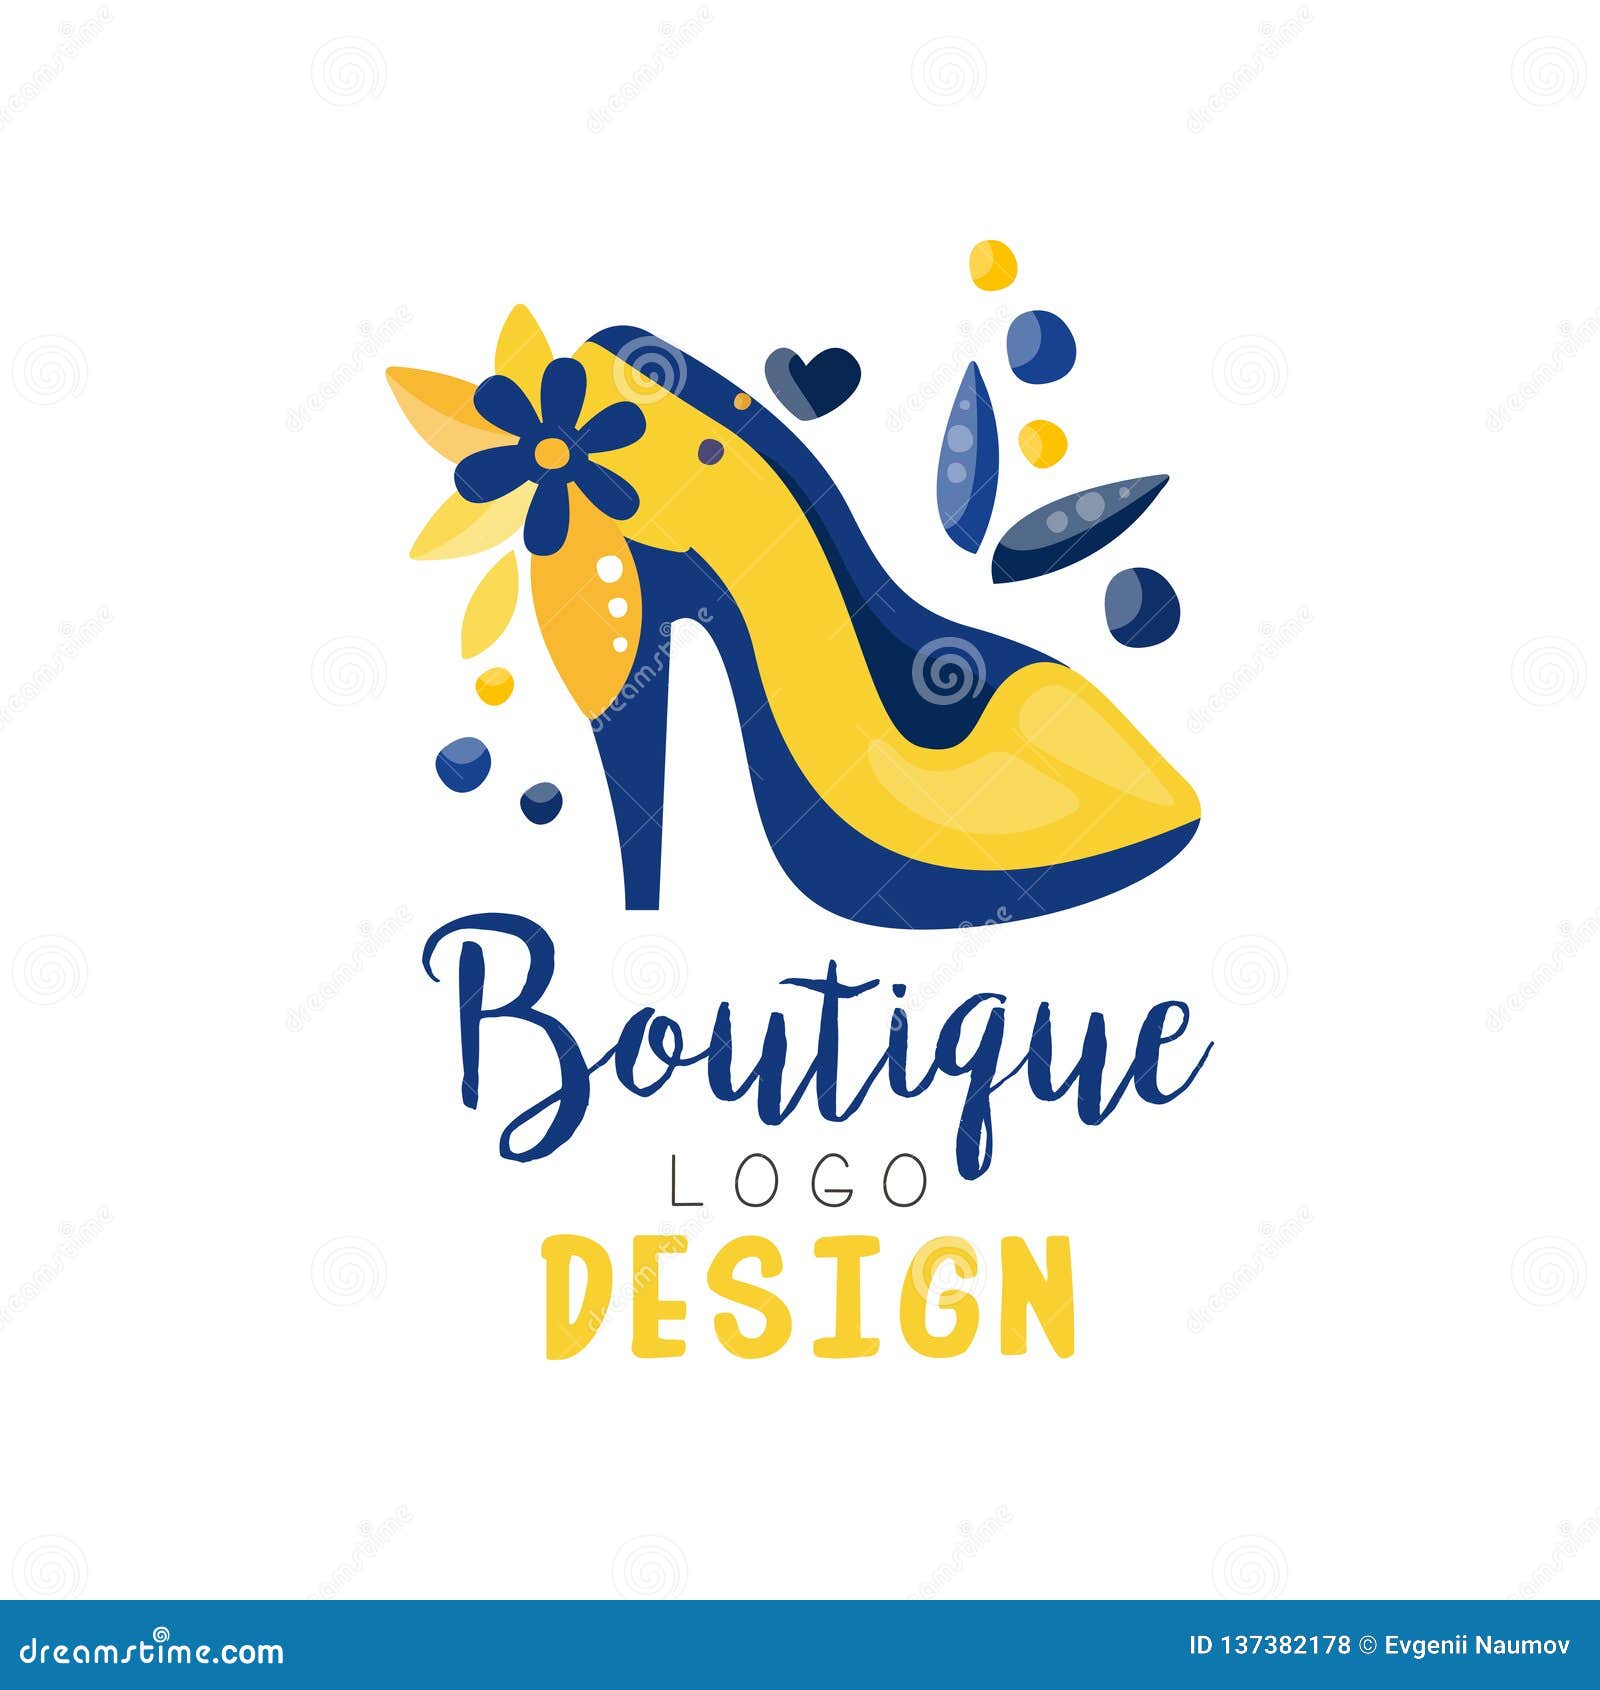 Boutique Logo Design, Fashion Clothes Shop, Store, Salon Label Vector  Illustration Stock Vector - Illustration of color, clothes: 137382178